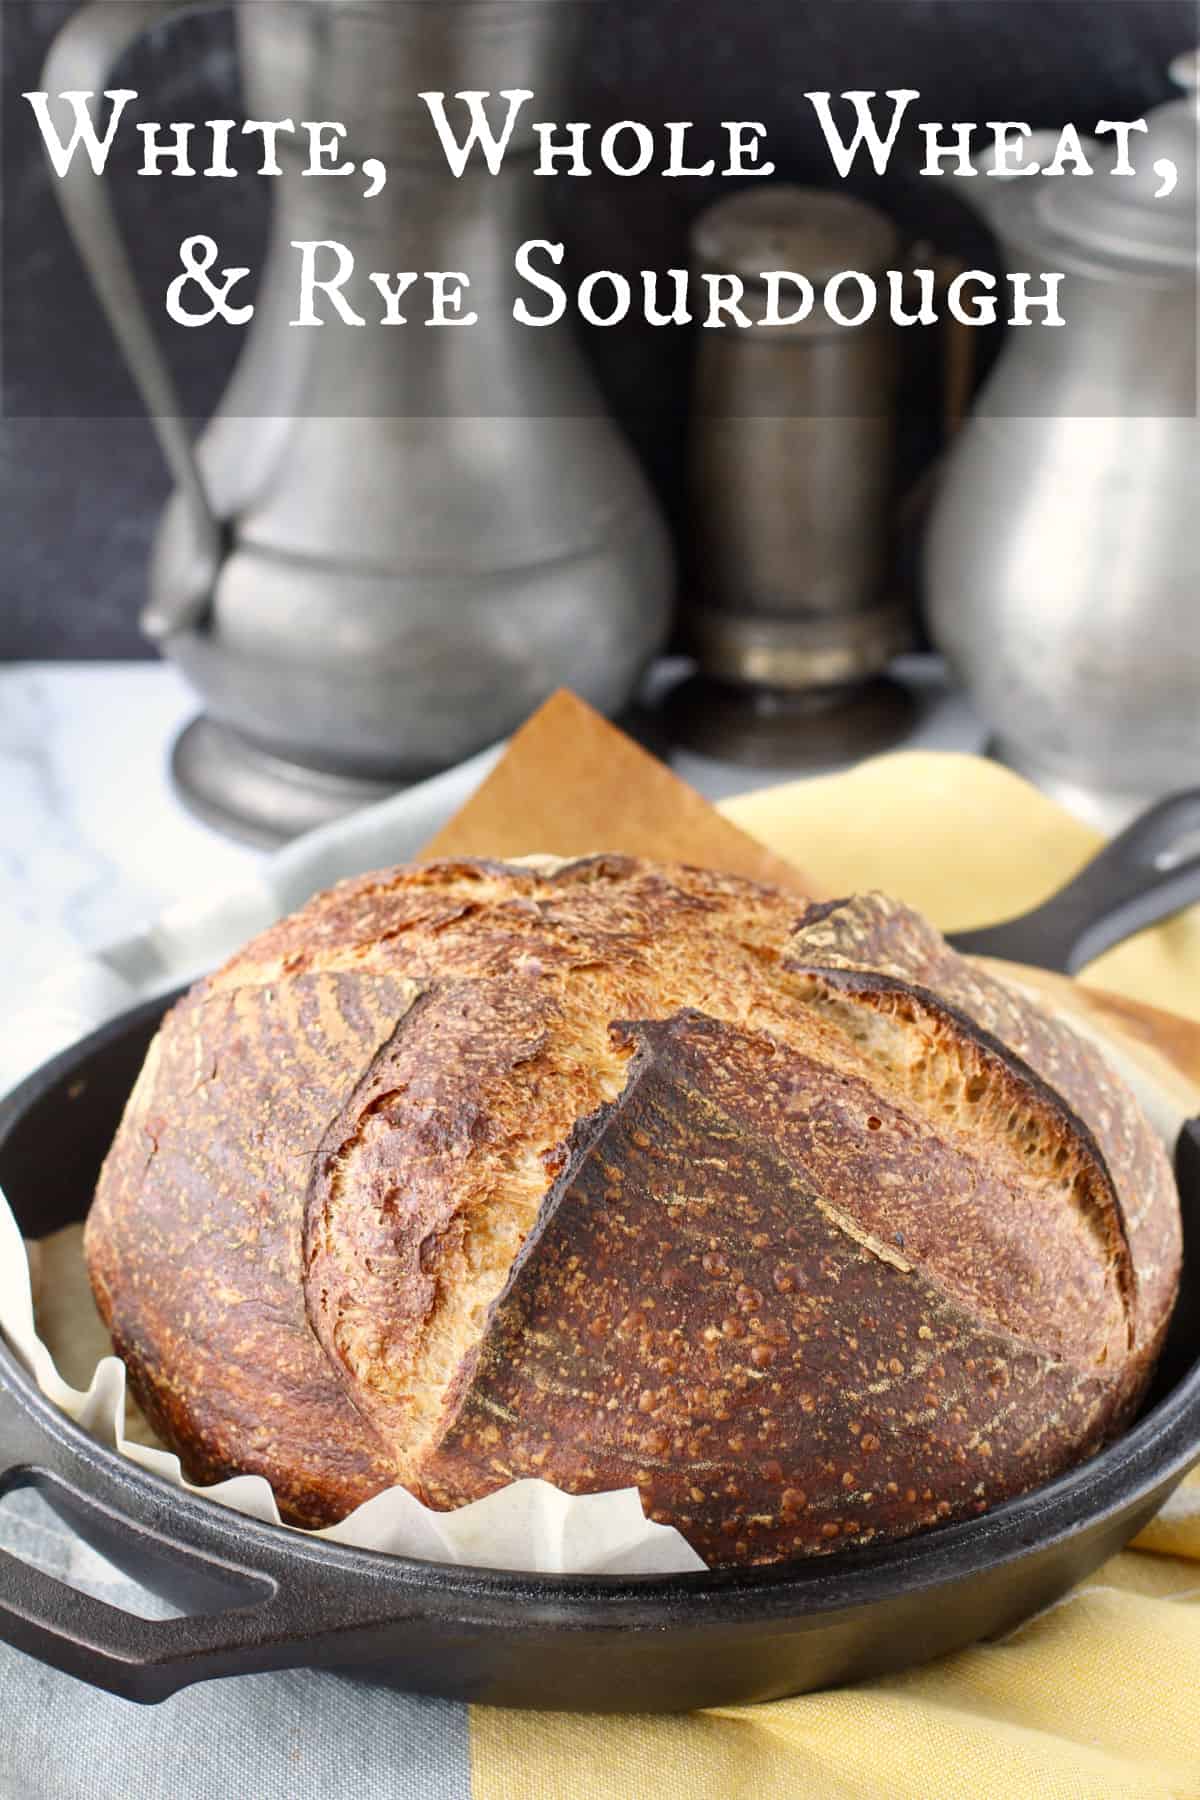 White, Whole Rye, and Whole Wheat Sourdough Bread